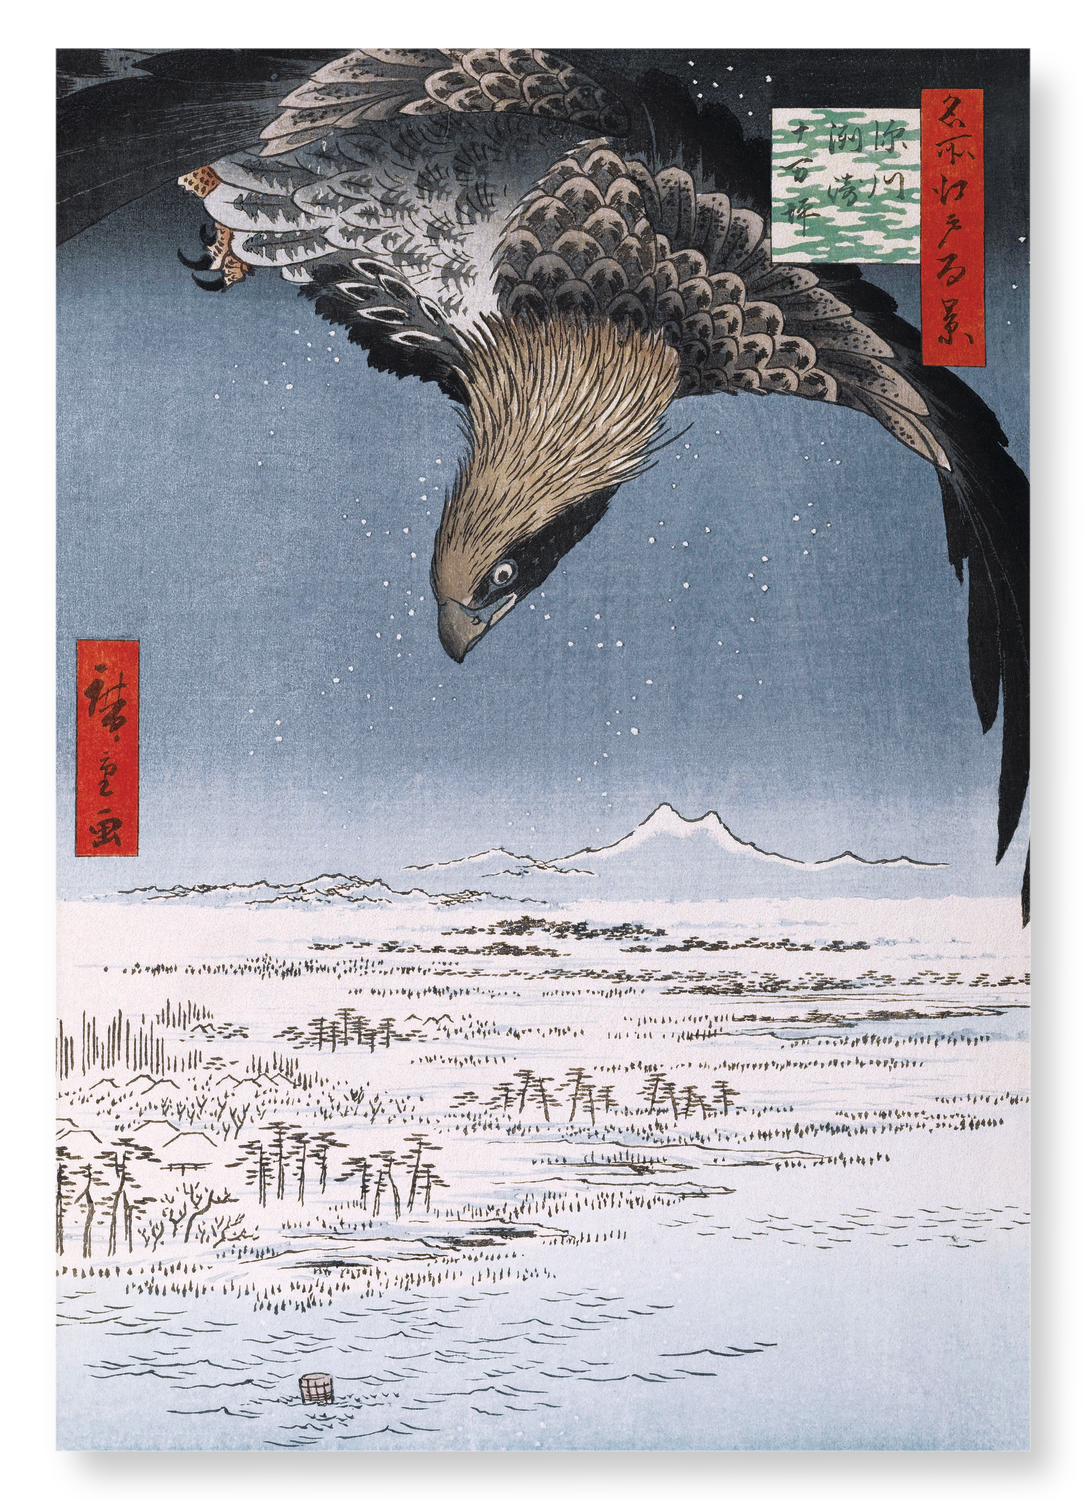 FUKAGAWA SUSAKI AND JUMANTSUBO (1857): Japanese Art Print